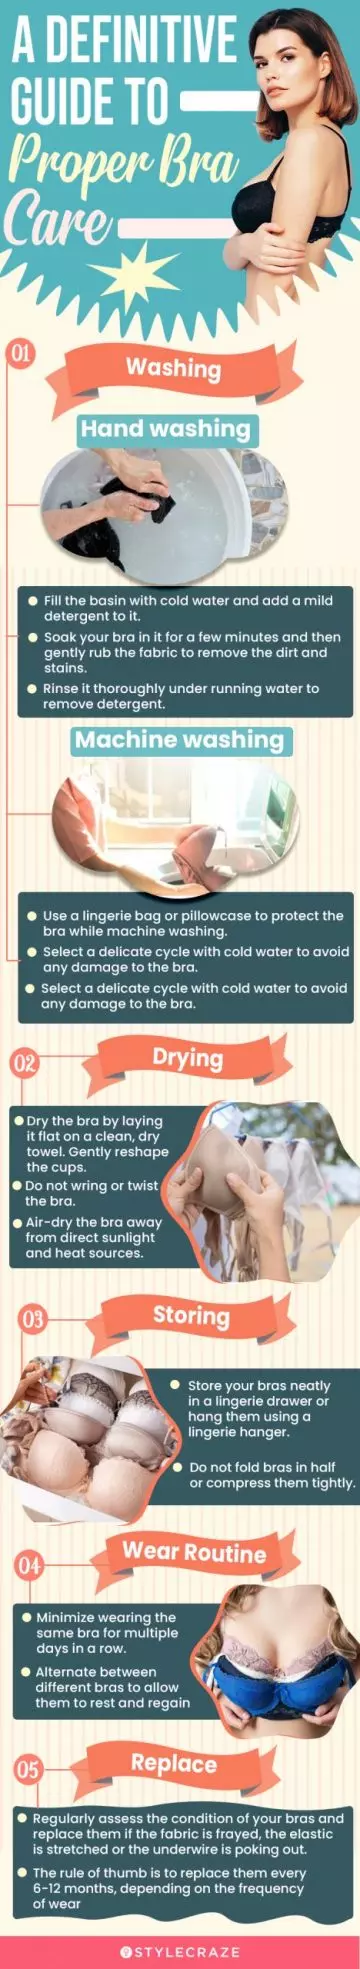 A Definitive Guide To Proper Bra Care (infographic)